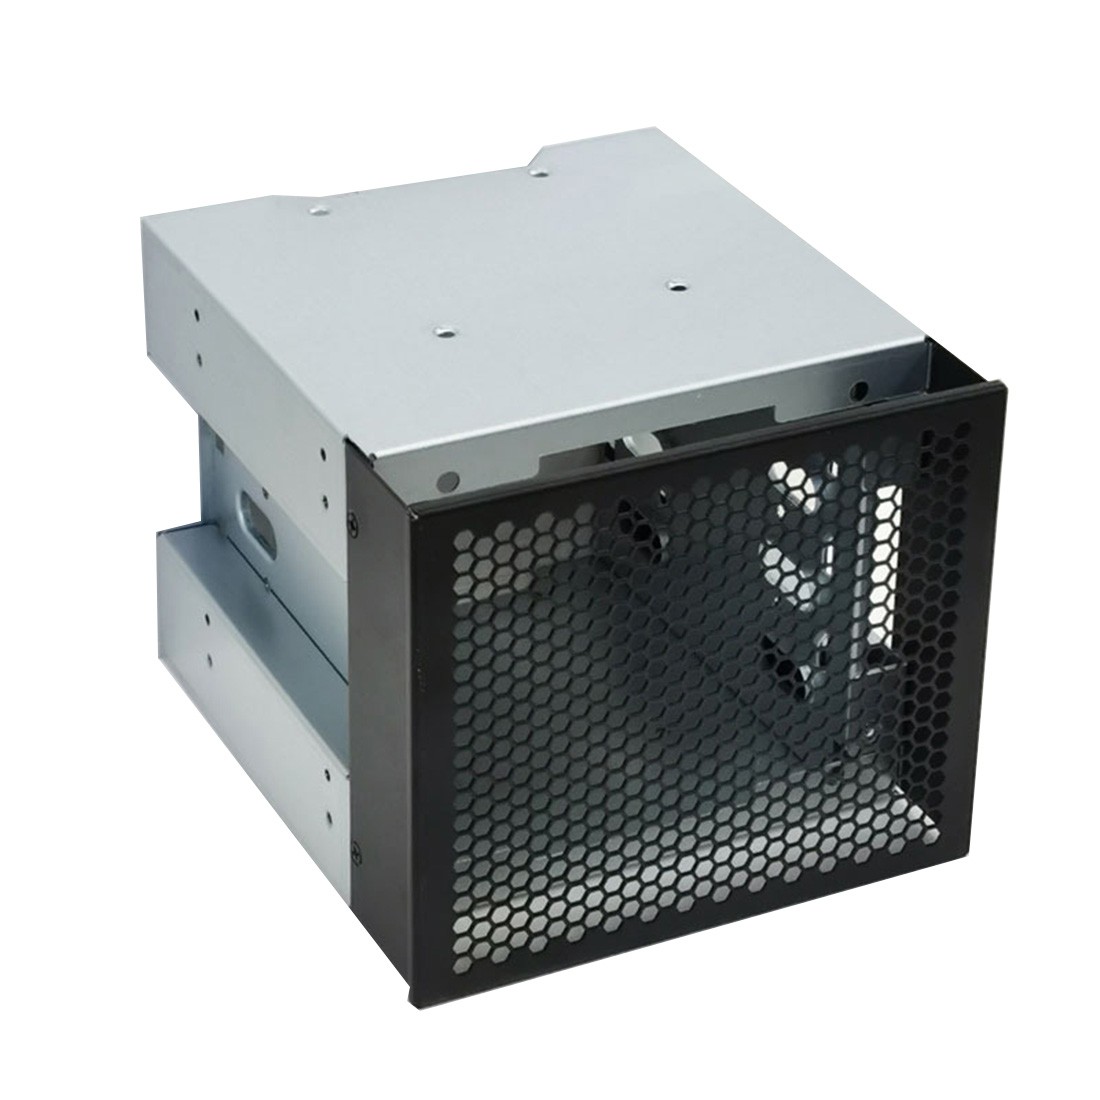 5-inch-hard-drive-cage-case-5-25-inch-optical-drive-bit-conversion-hard-drive